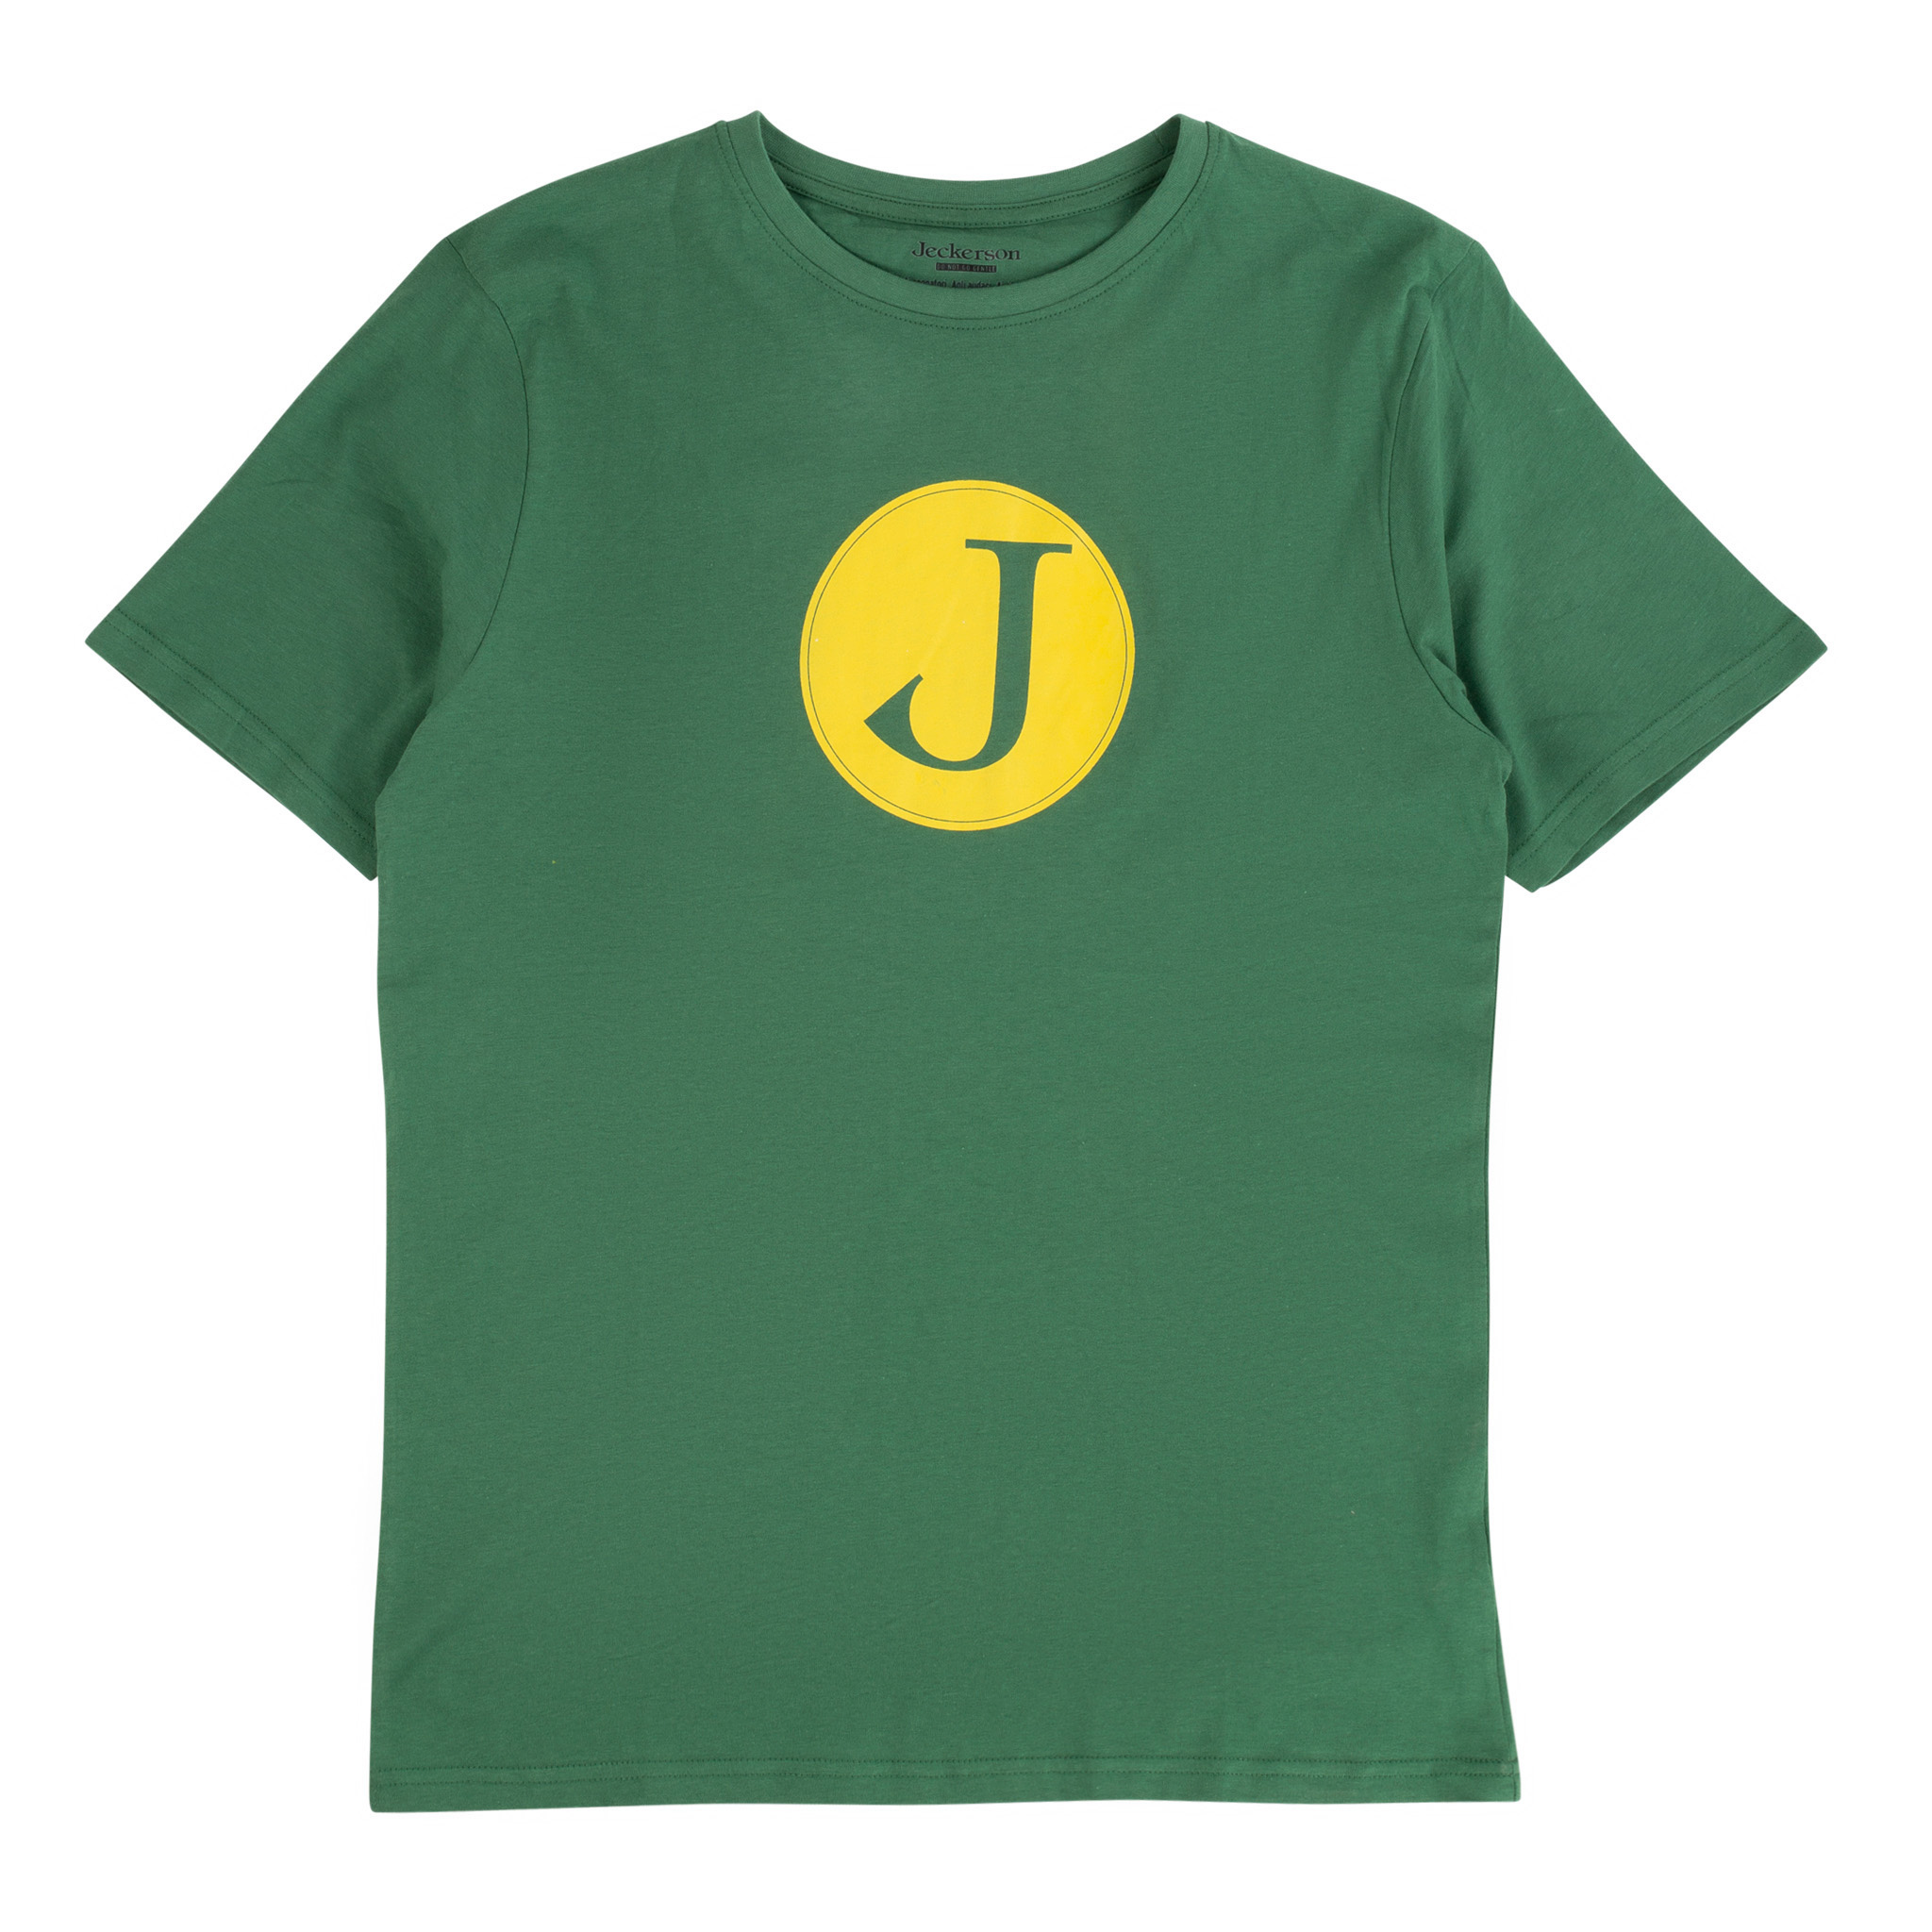 jeckerson - t-shirt